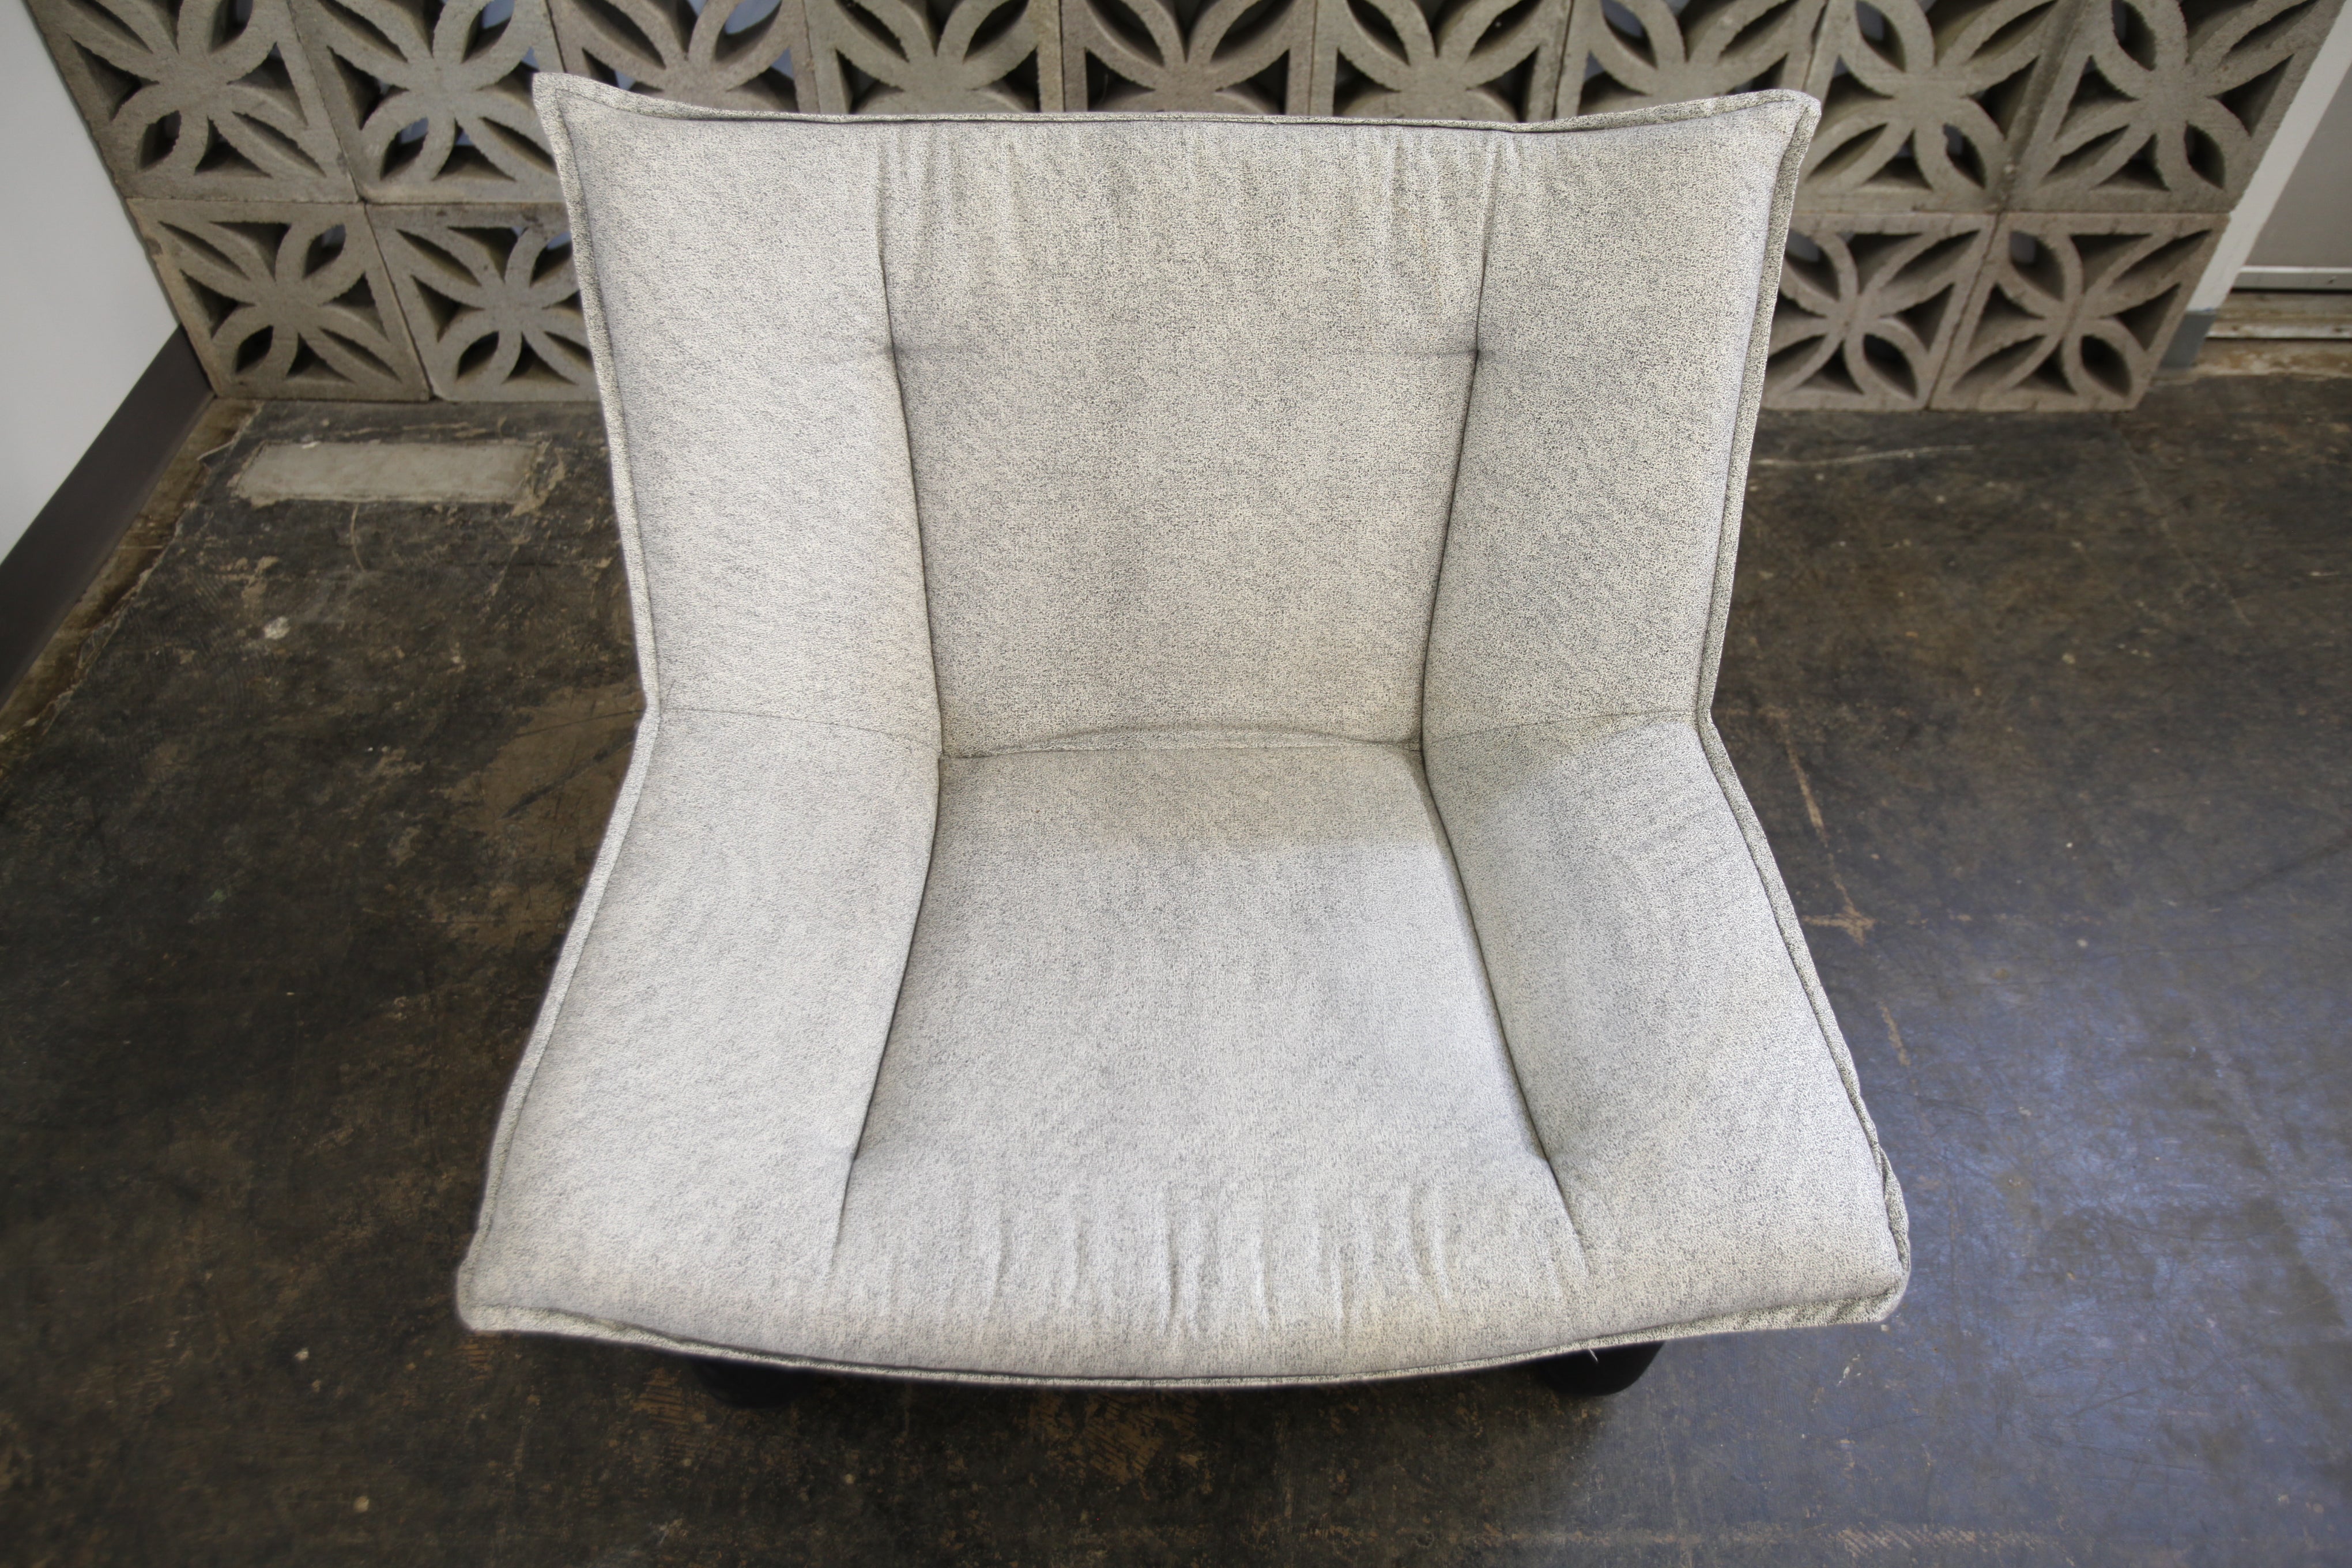 Vintage Lounge Chair / Brand Unknown (38"W x 34"D x 31"H)